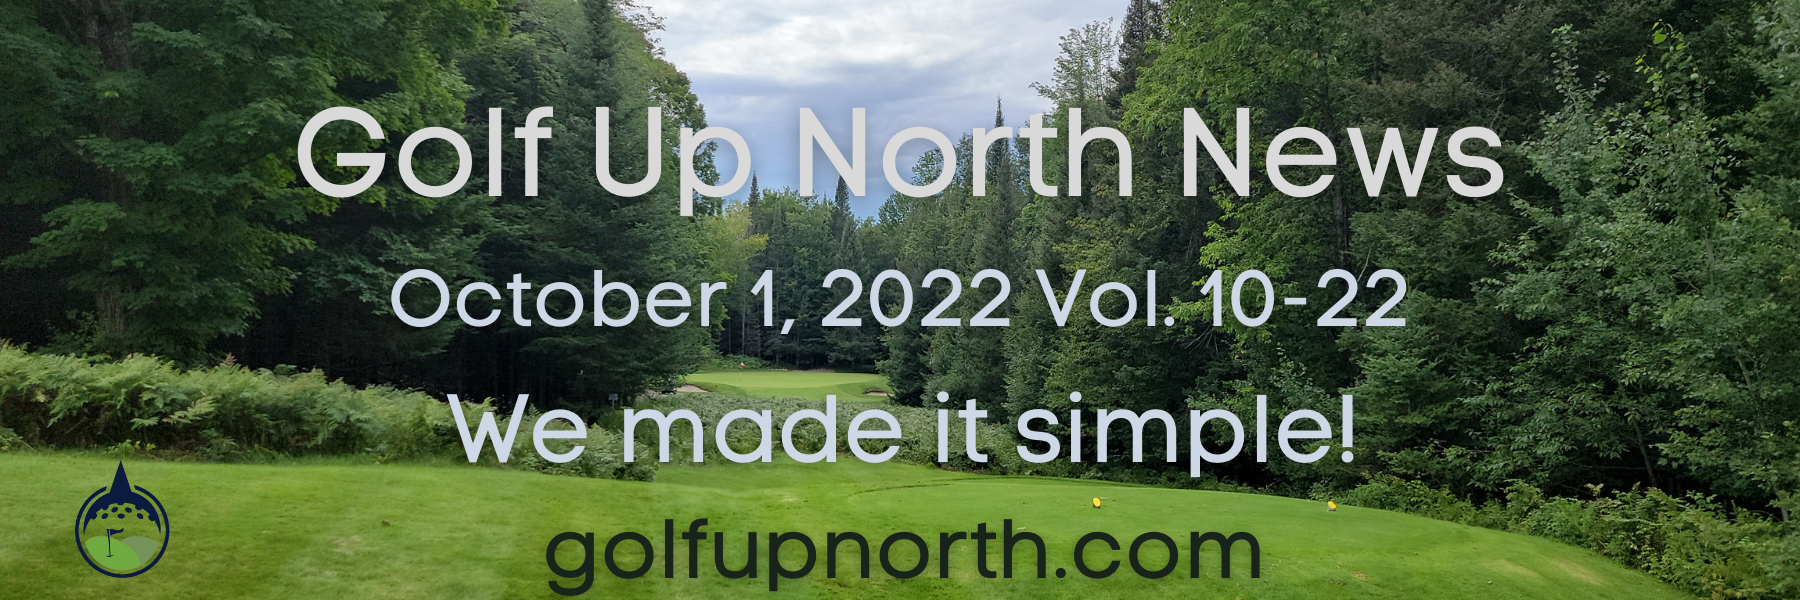 10.1.22 Golf Newsletter Header